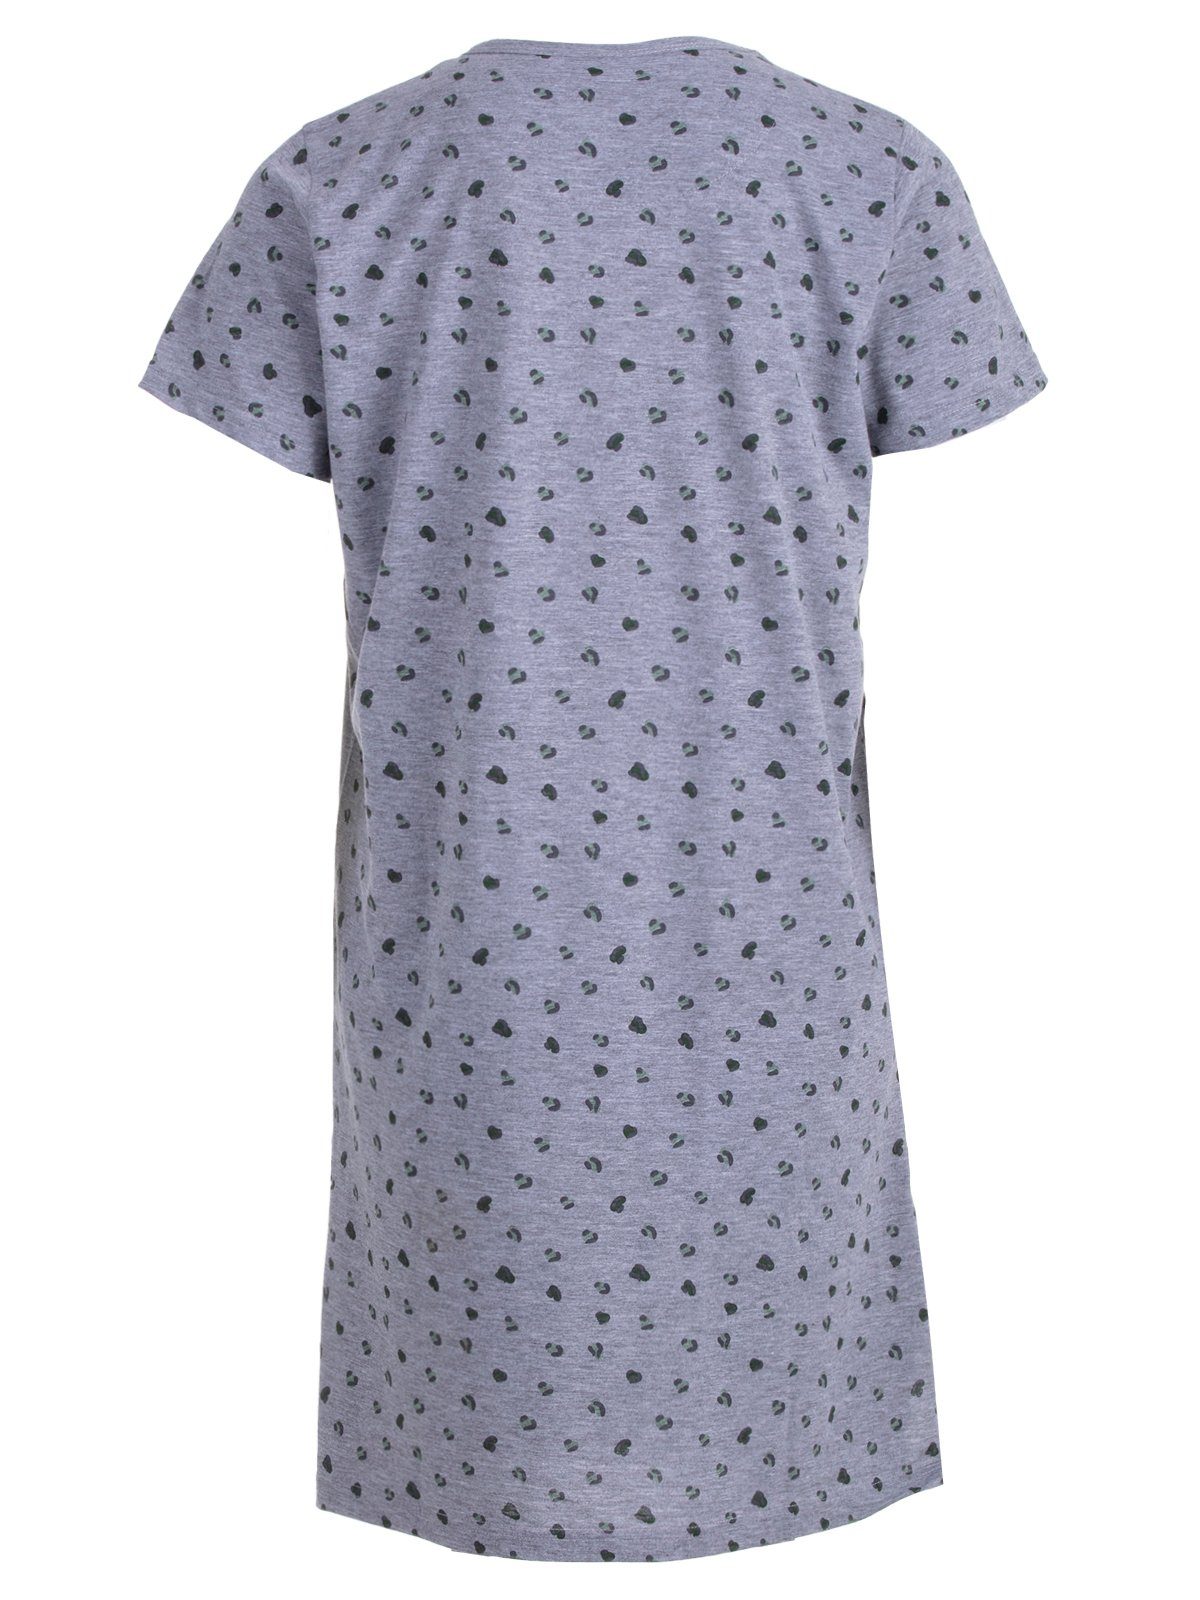 Herzleo Nachthemd - Nachthemd Kellerfalte Kurzarm zeitlos grau